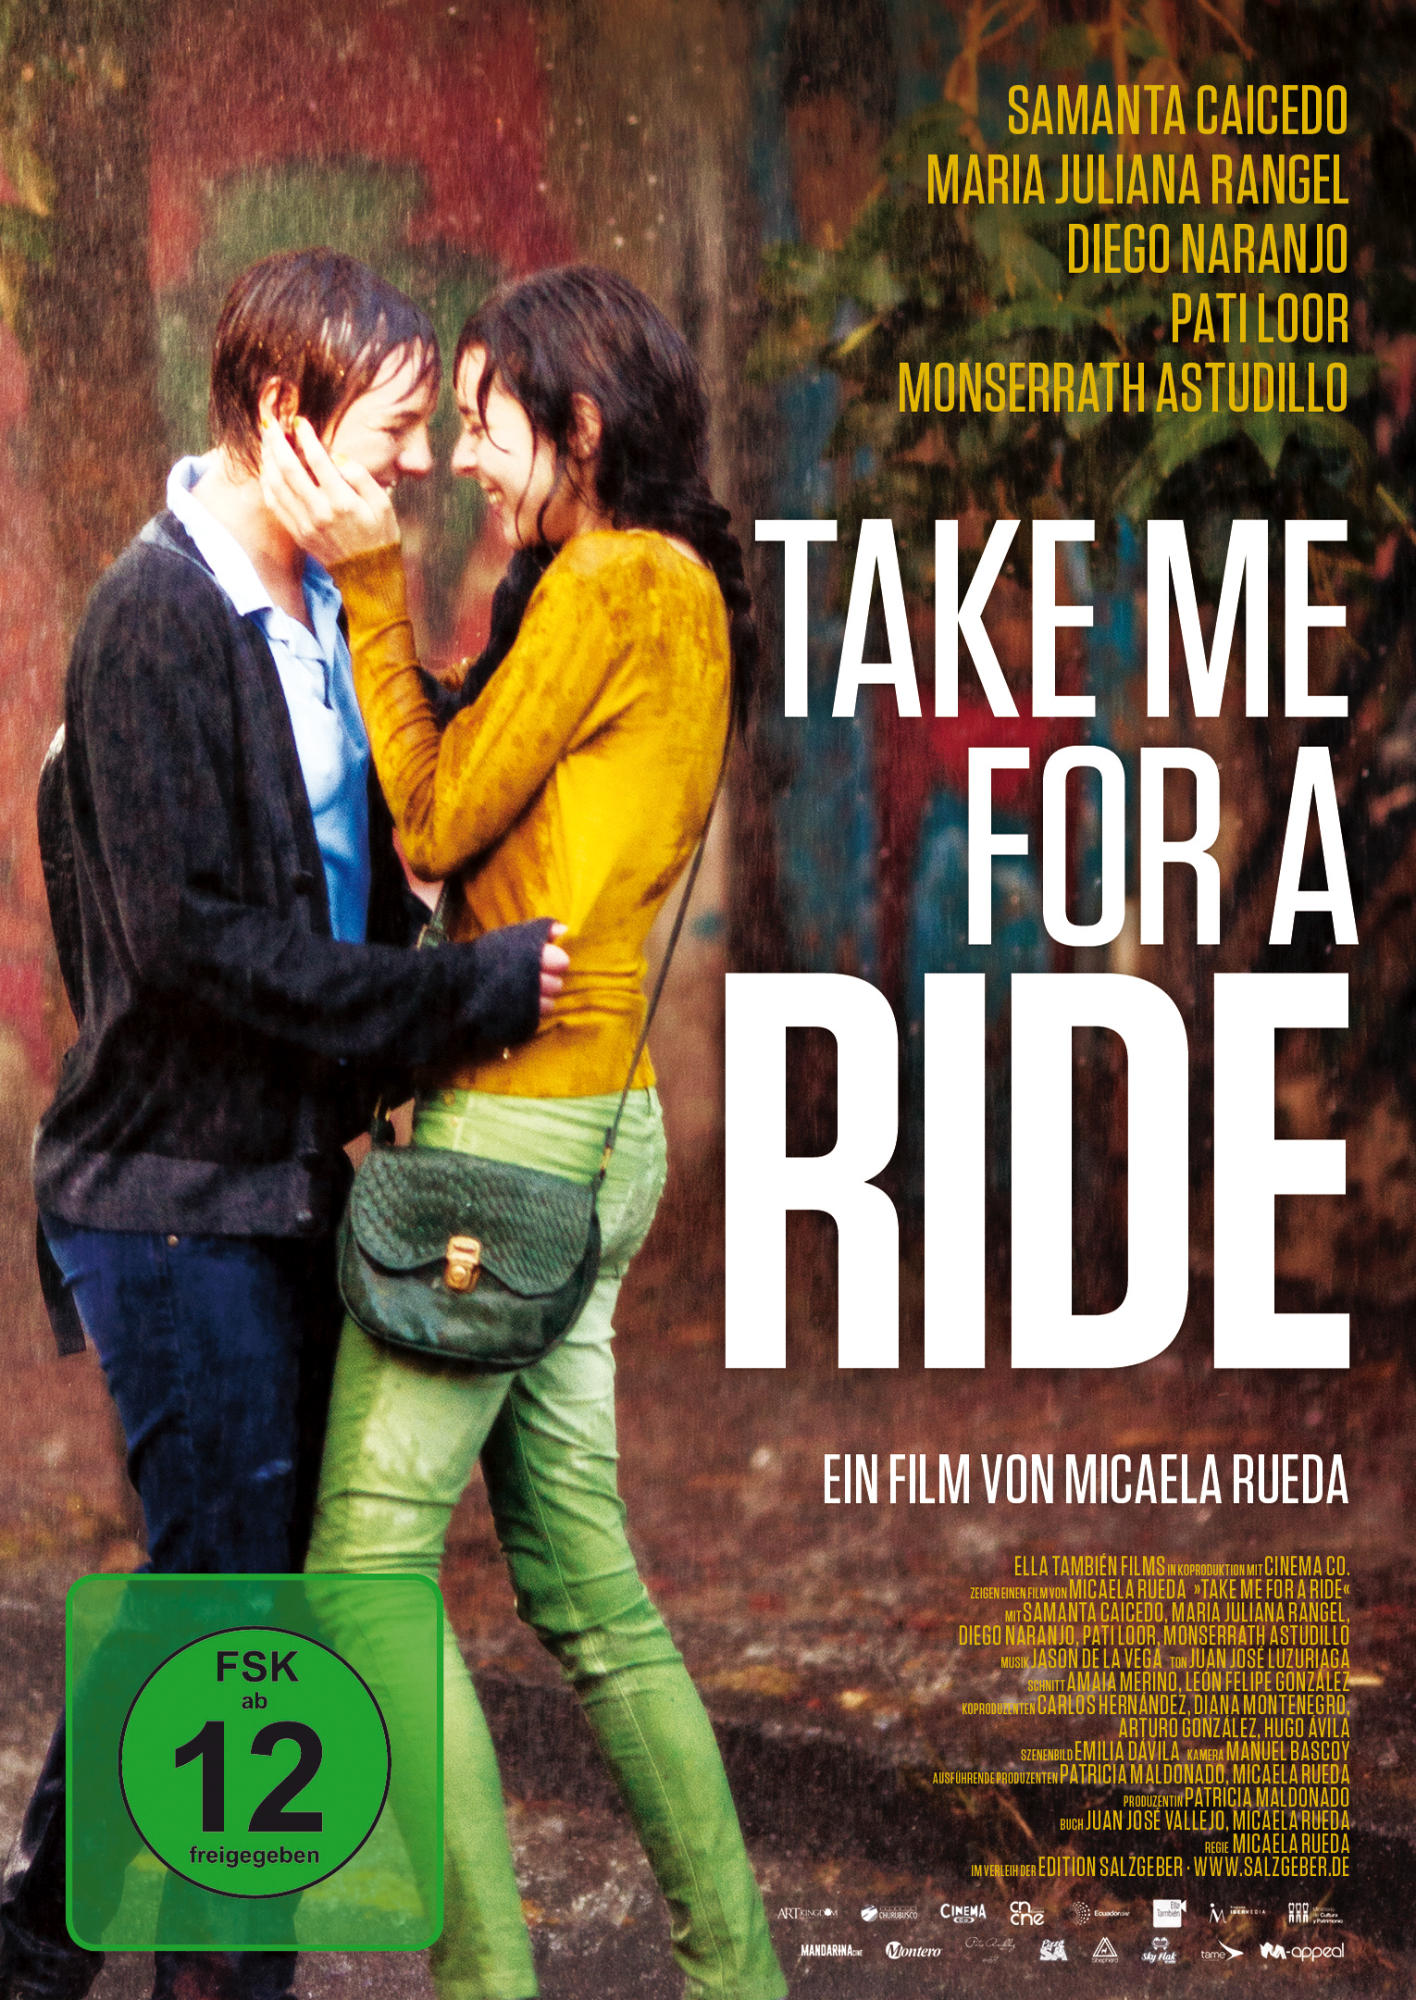 Take Me For A Ride DVD